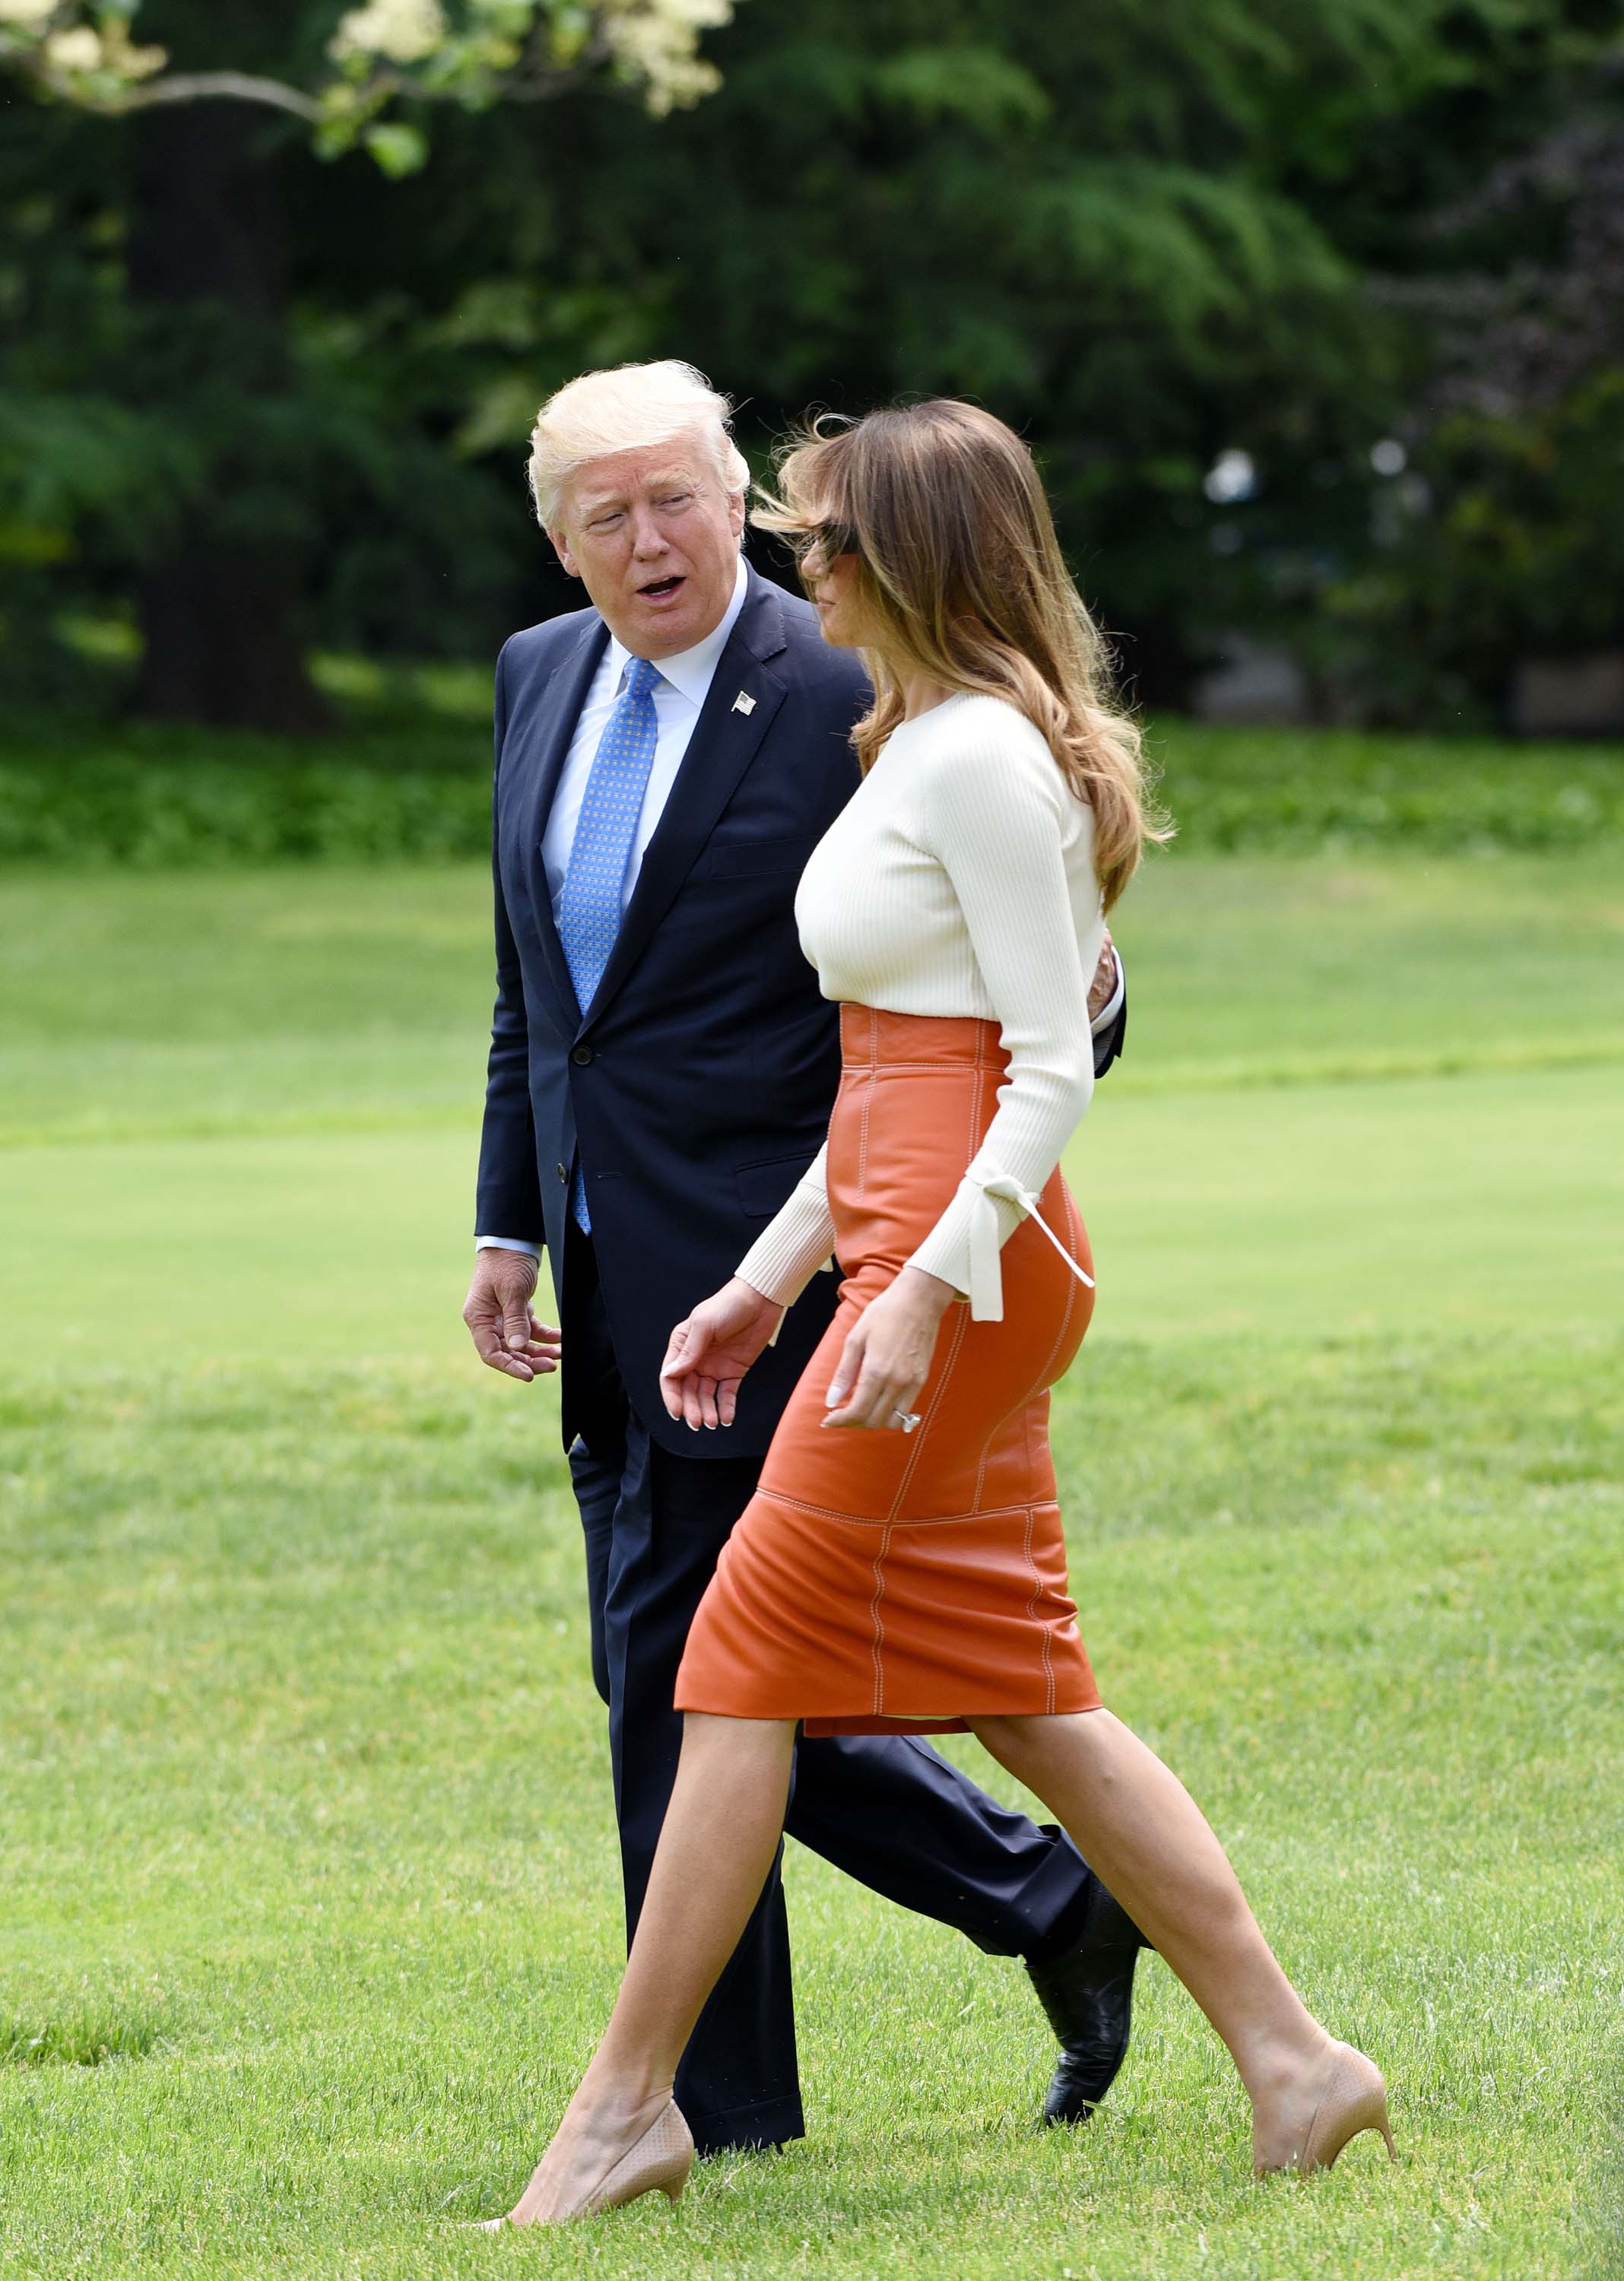 Melania Trump departing the White House